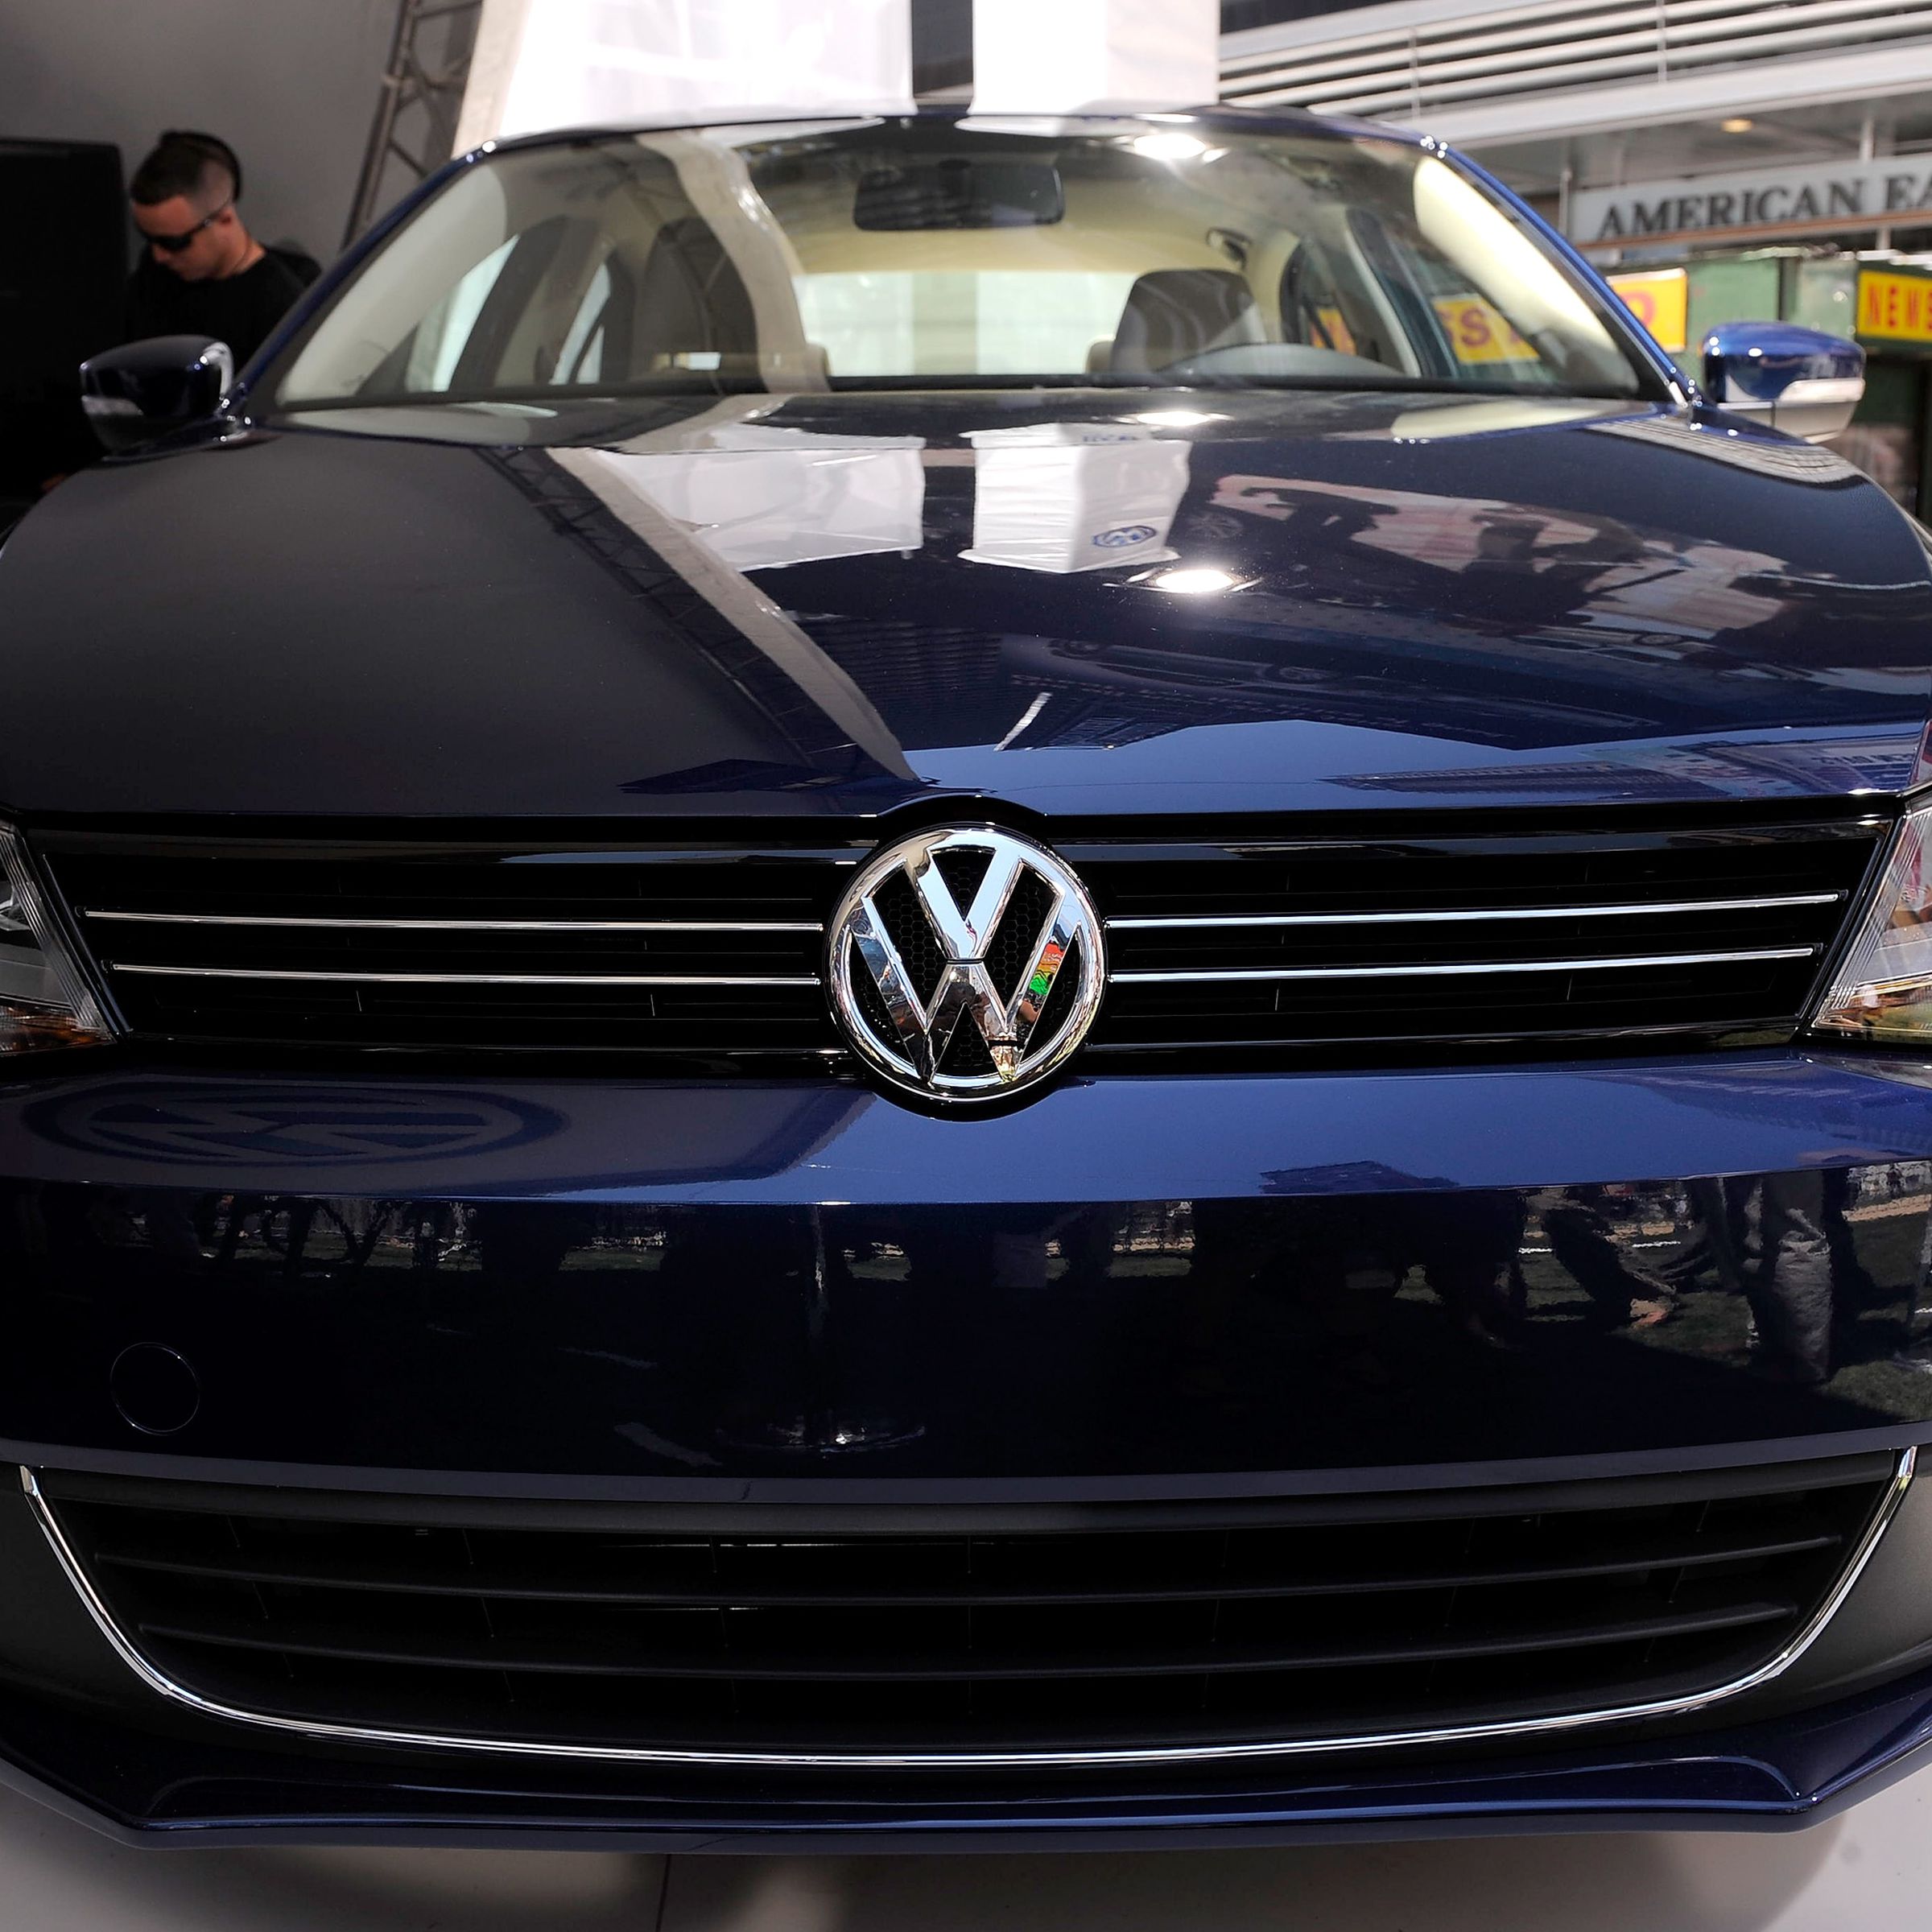 Volkswagen's New 2011 Compact Sedan World Premiere